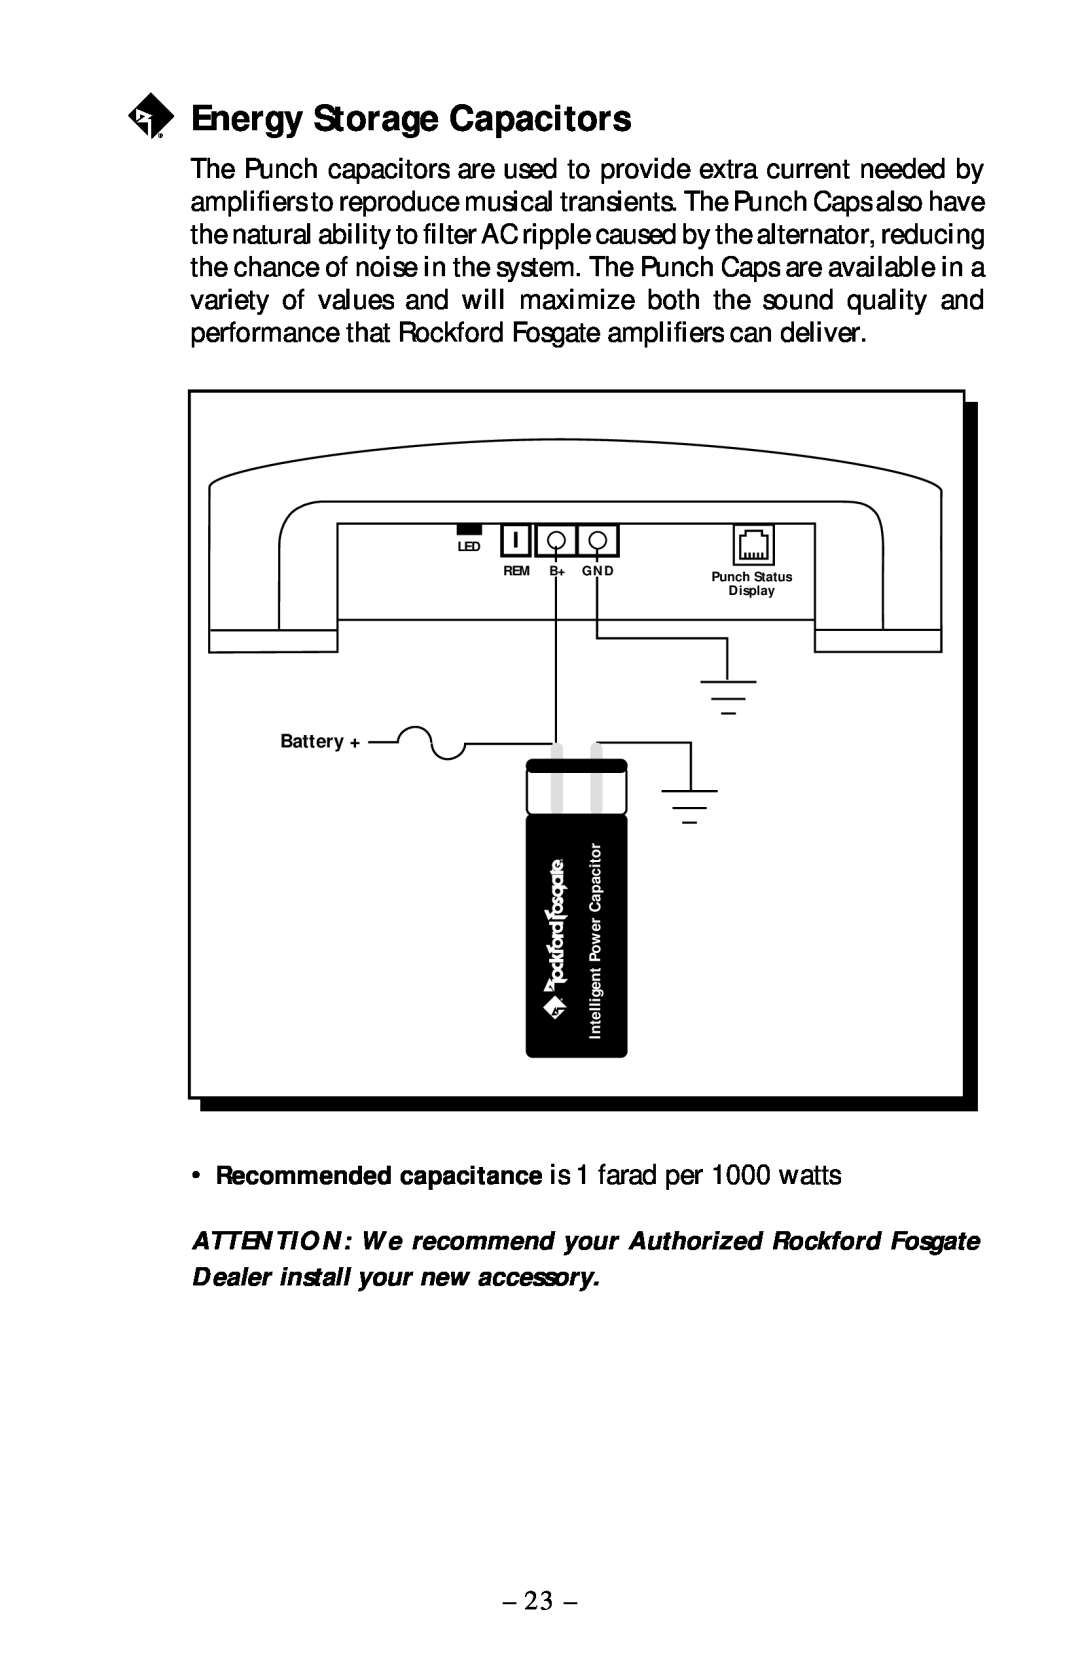 Rockford Fosgate 40X2 manual Energy Storage Capacitors 